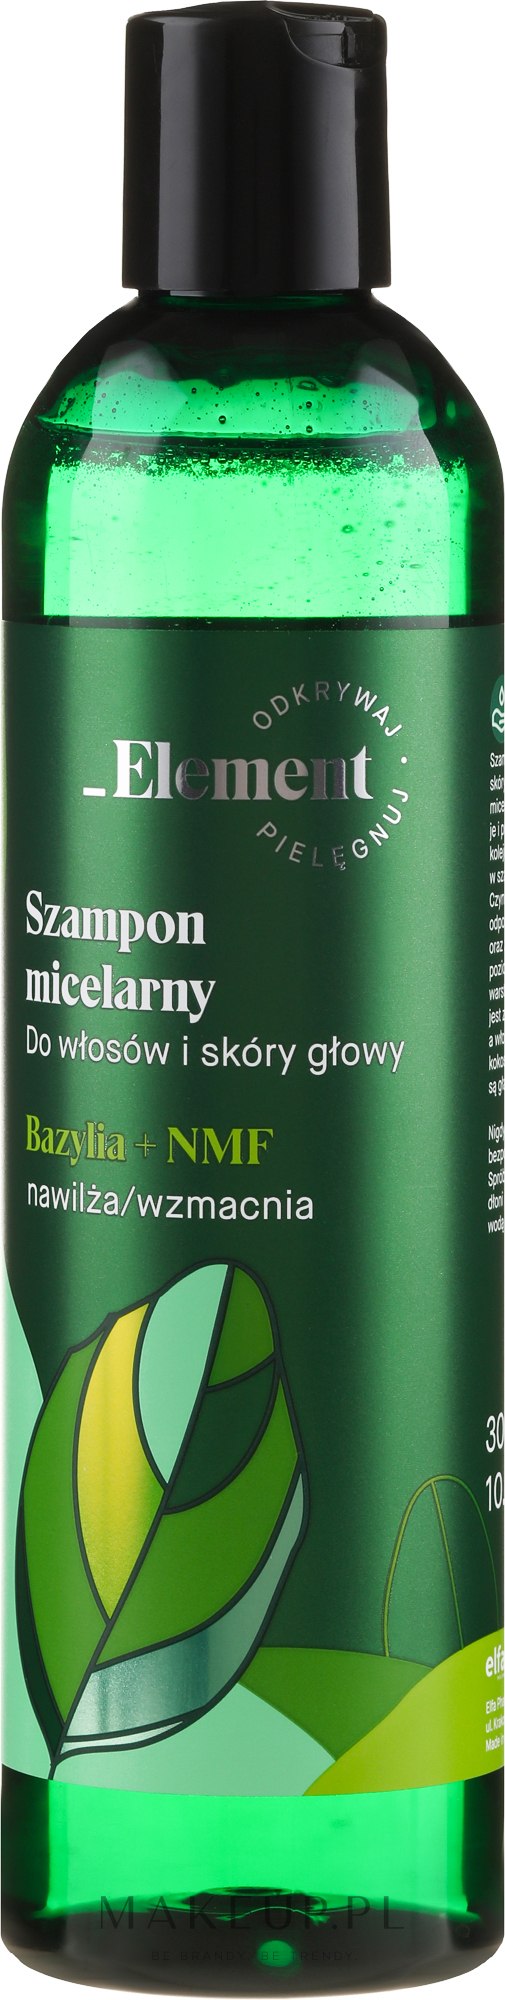 szampon z ekstraktem z bazylii i nmf